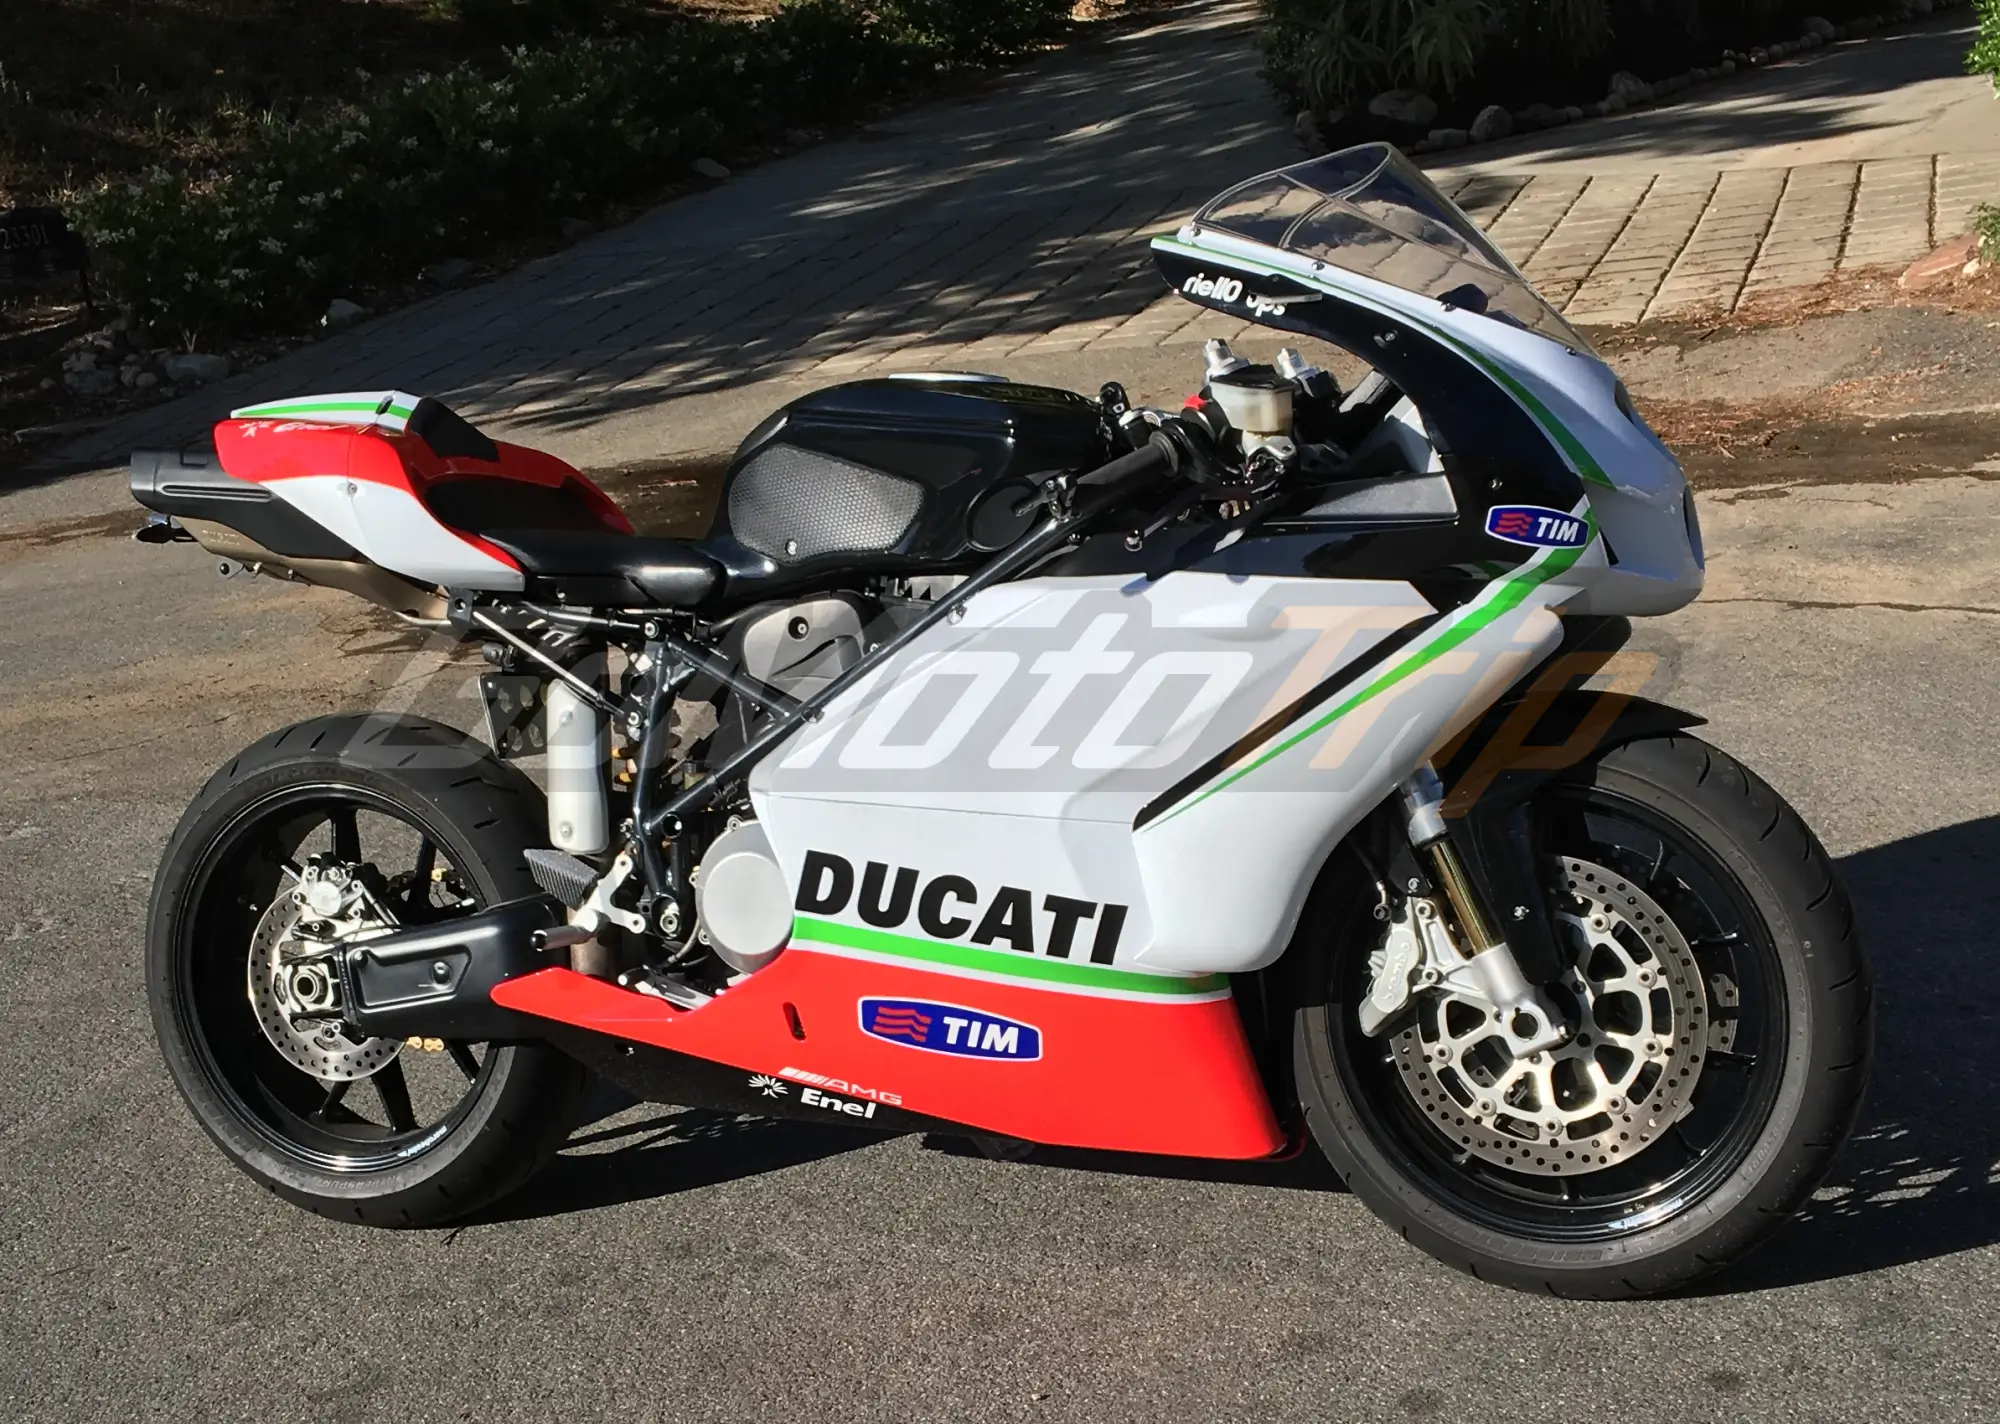 Rider-Review-Sam-Ducati-749-999-GP-12-Fairing-2